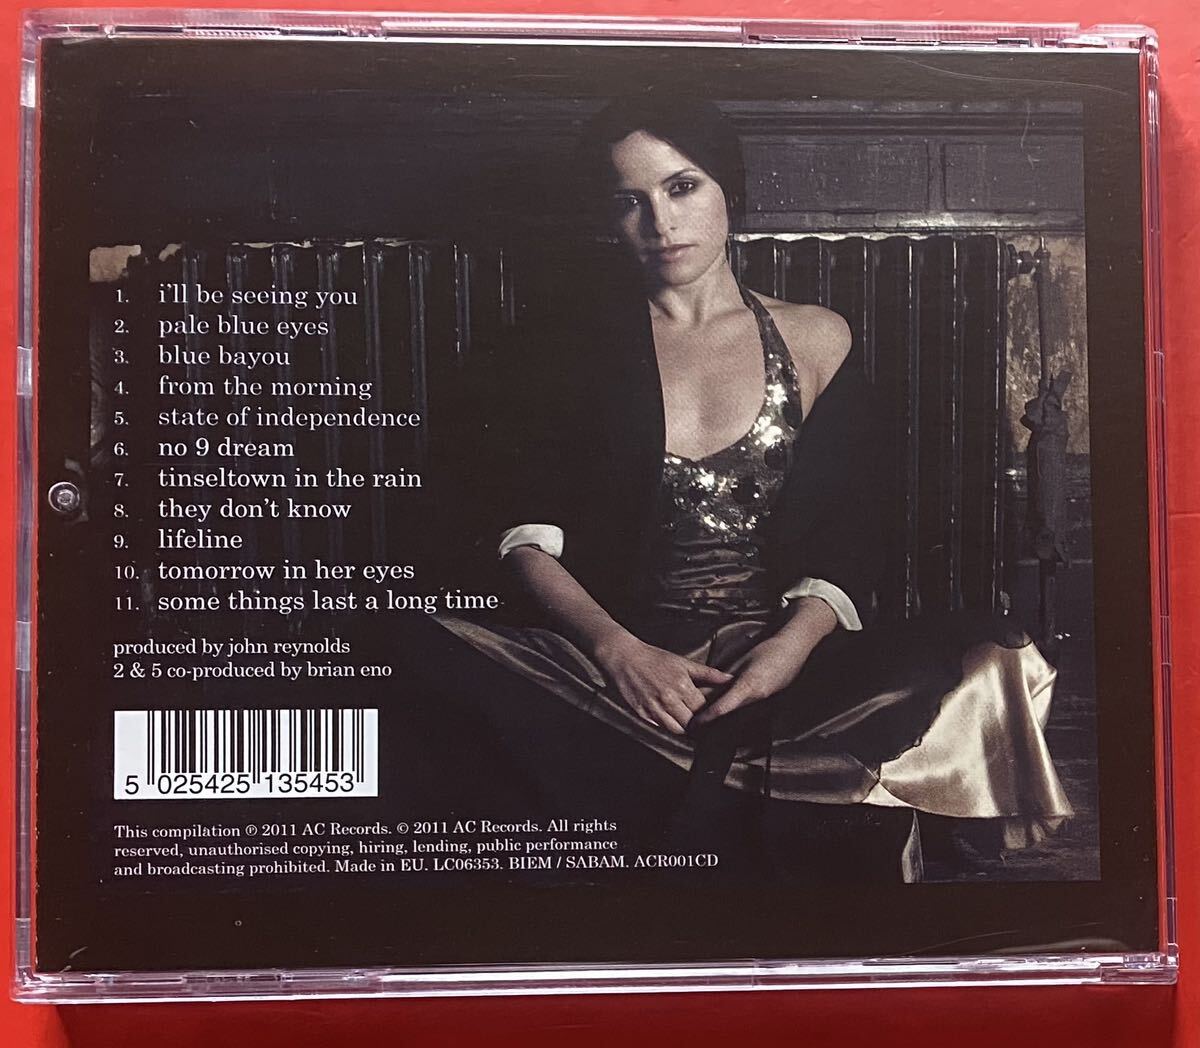 【CD】Andrea Corr「Lifelines」アンドレア・コアー 輸入盤 [04260100]_画像2